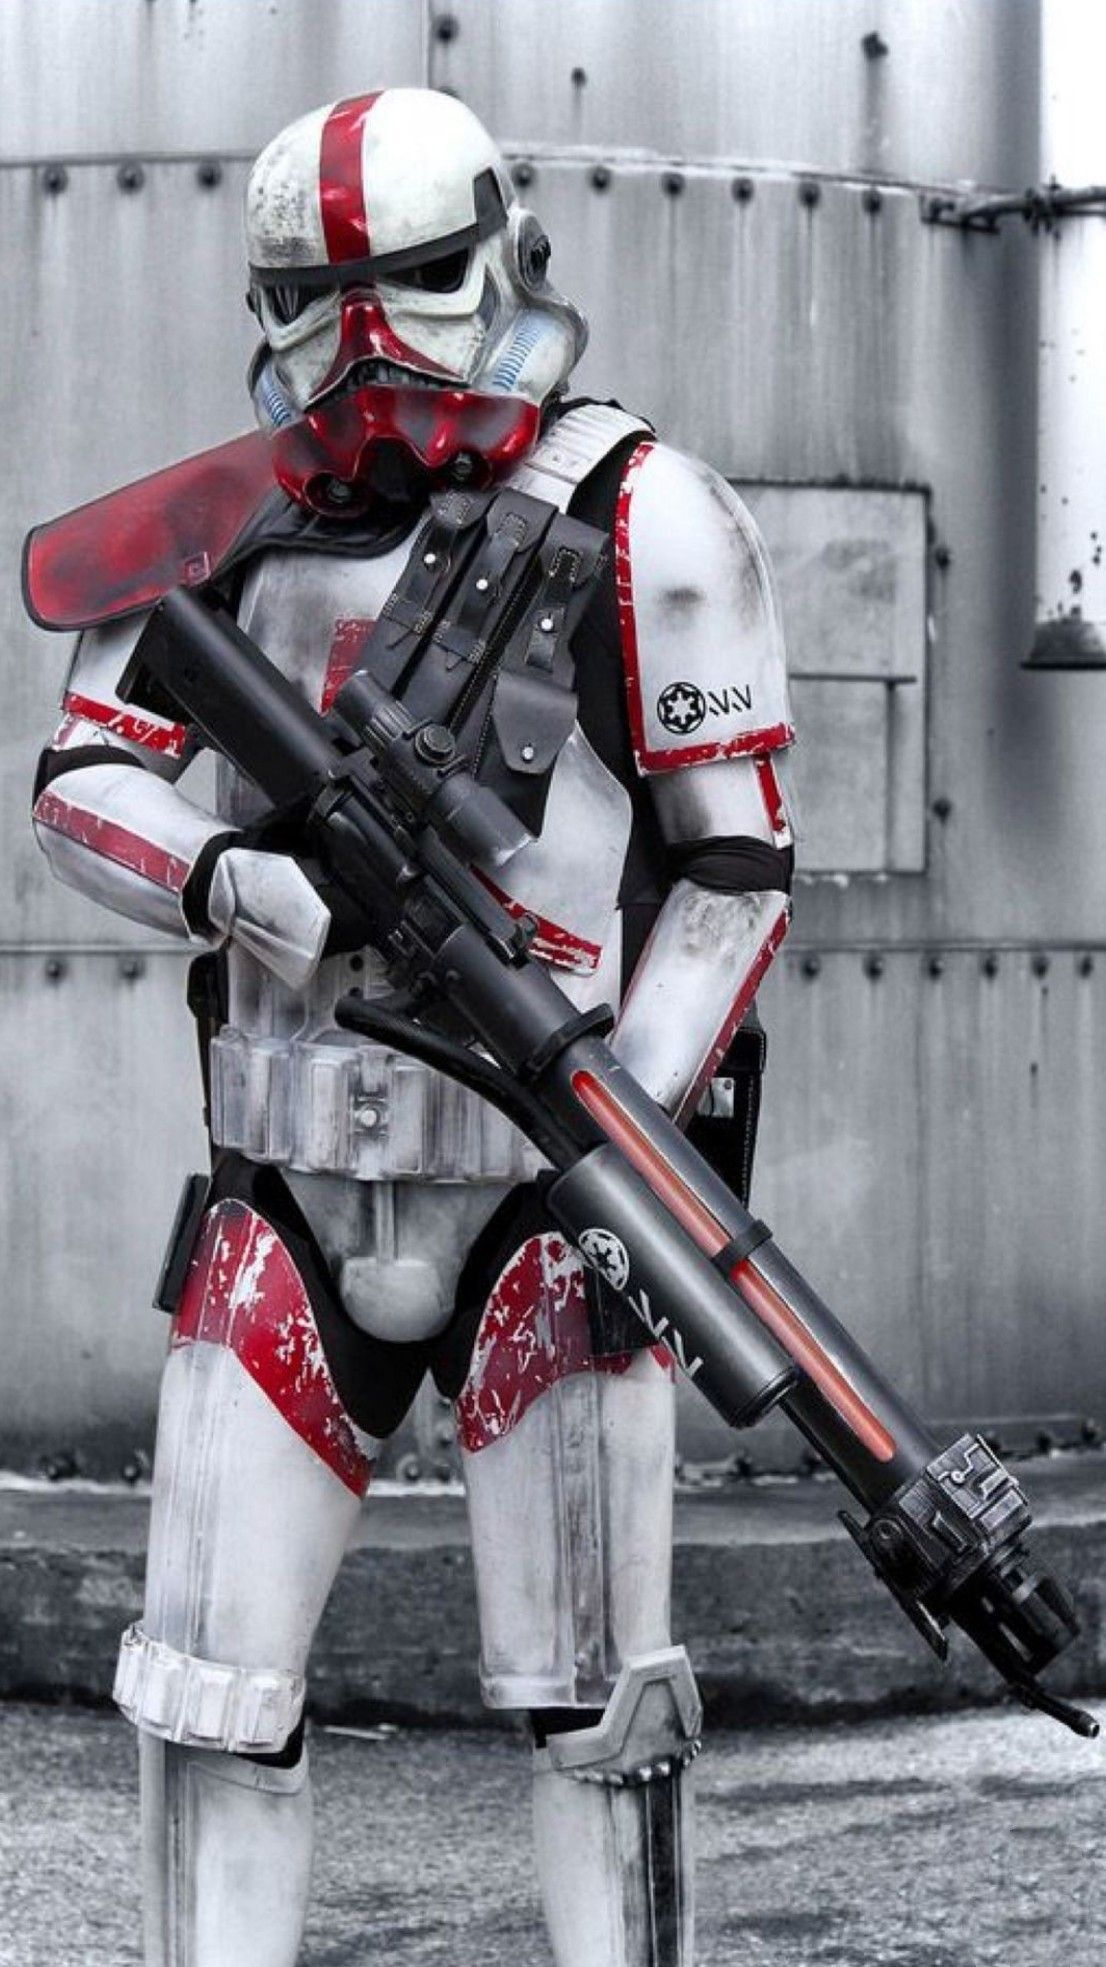 Shock trooper. Star wars picture, Star wars image, Star wars